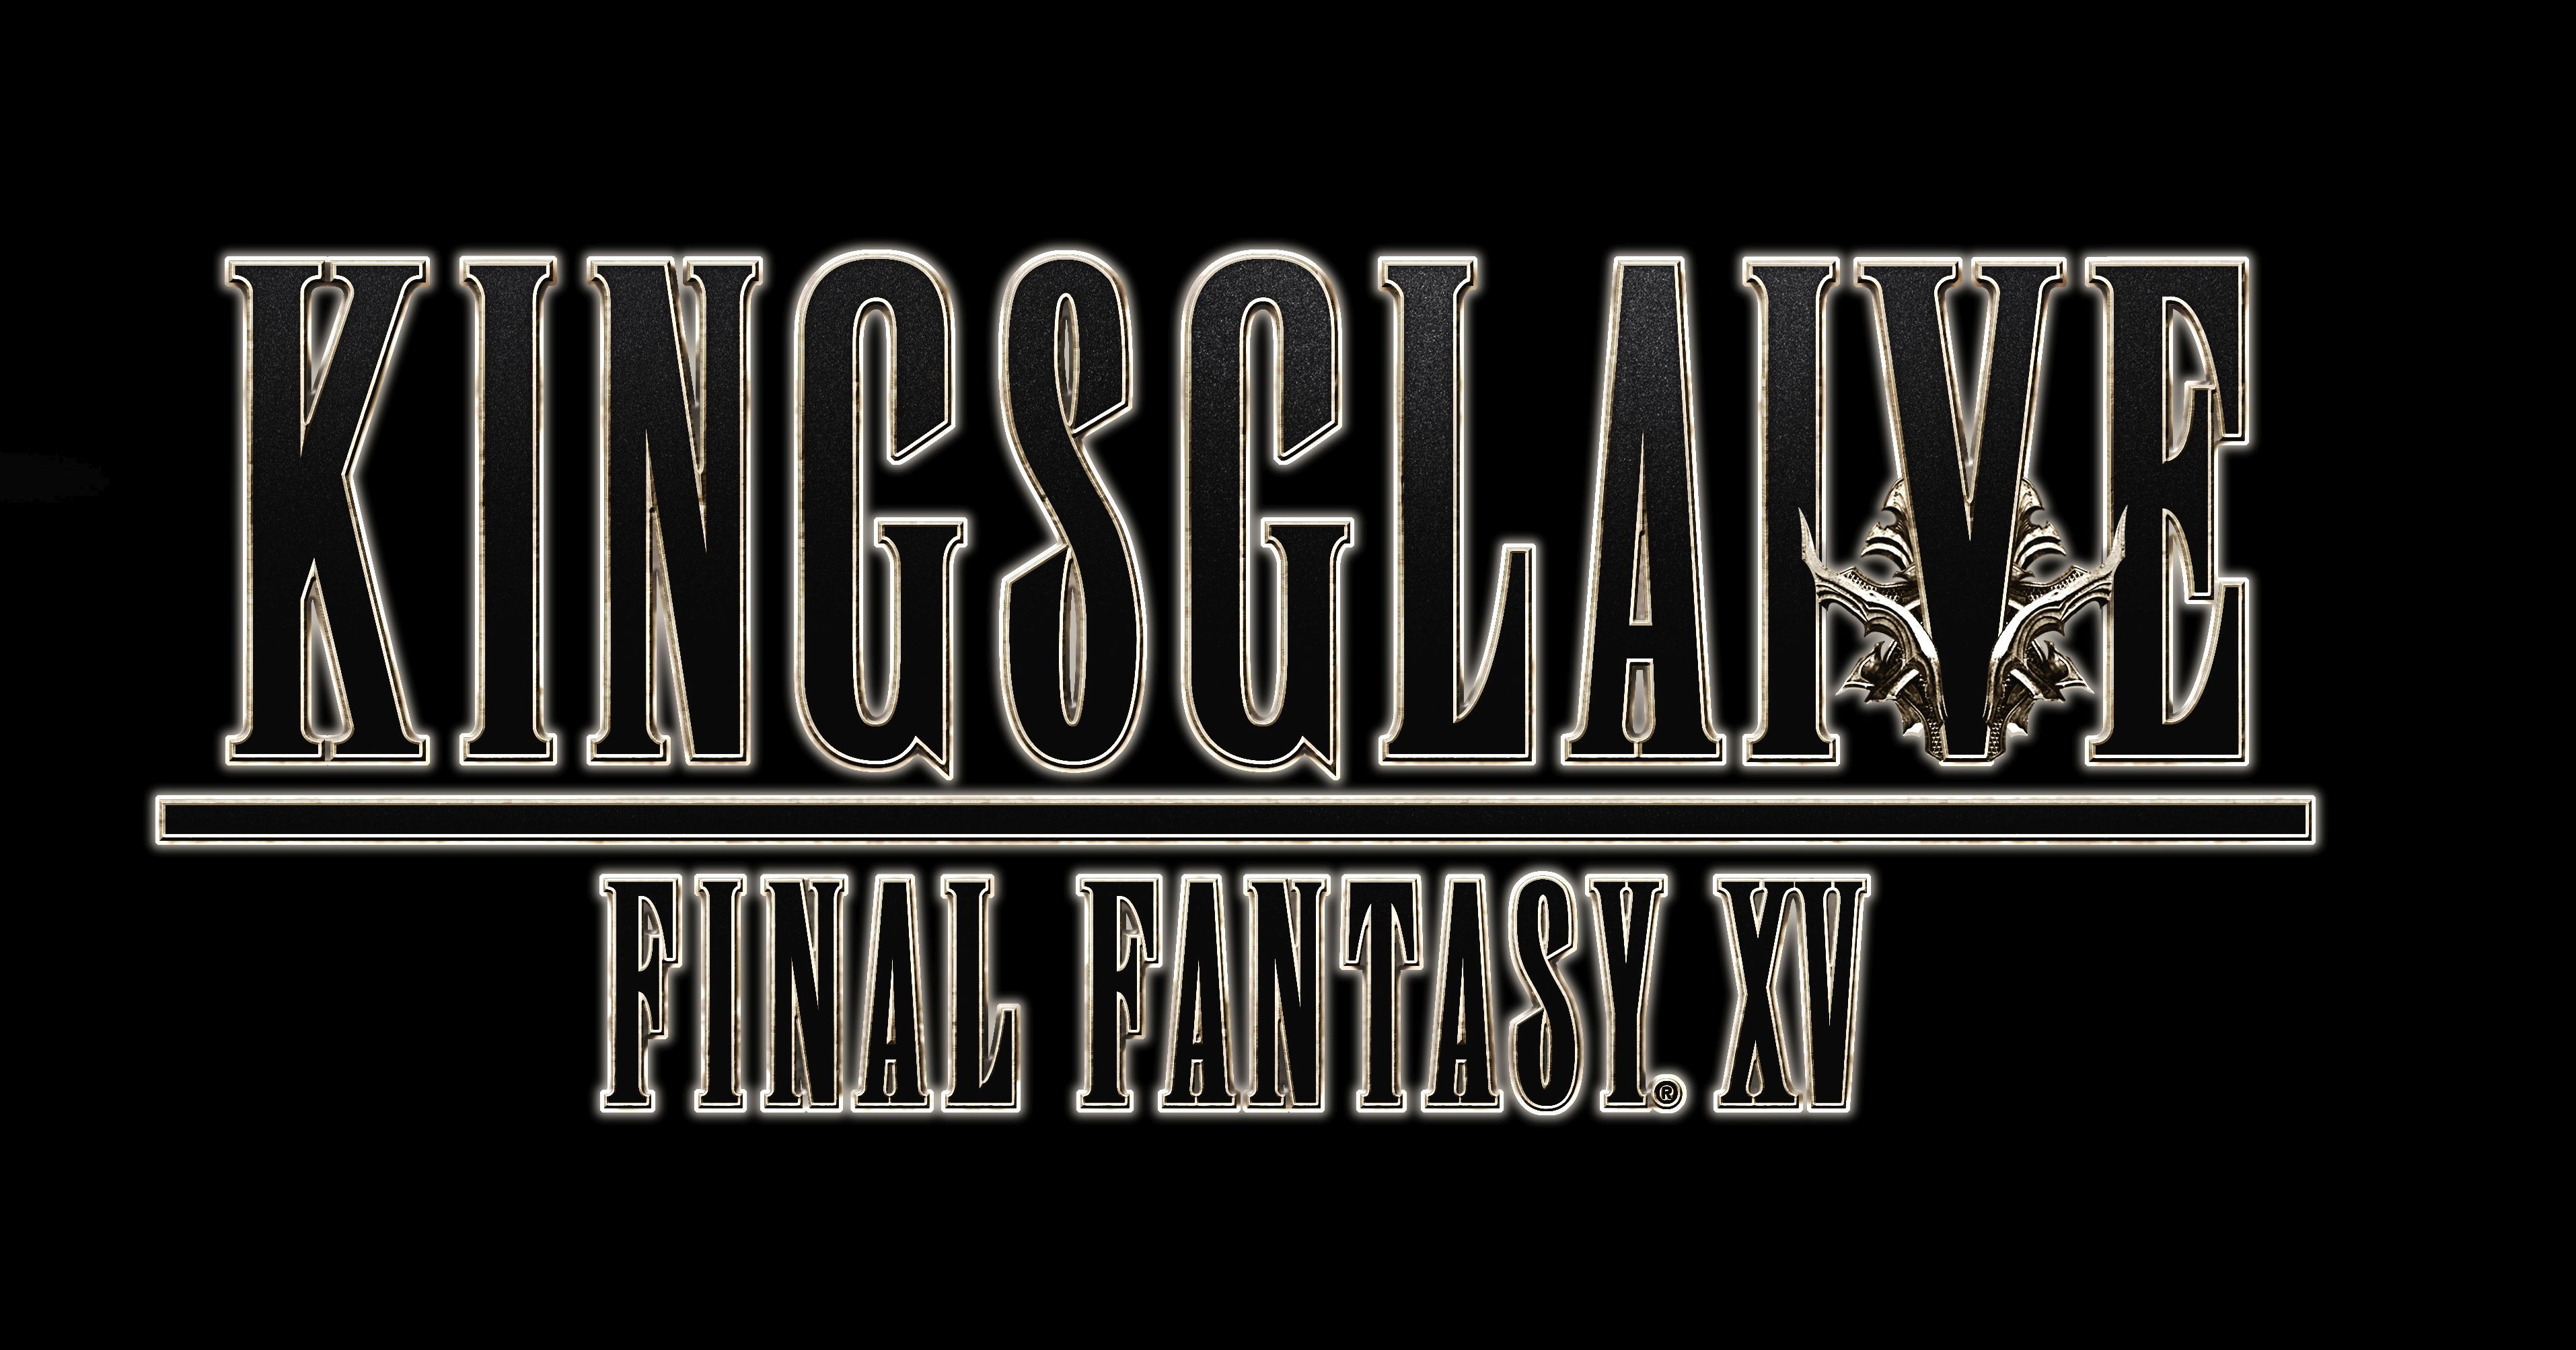 Final Fantasy XV anime begins tonight, CG film to follow